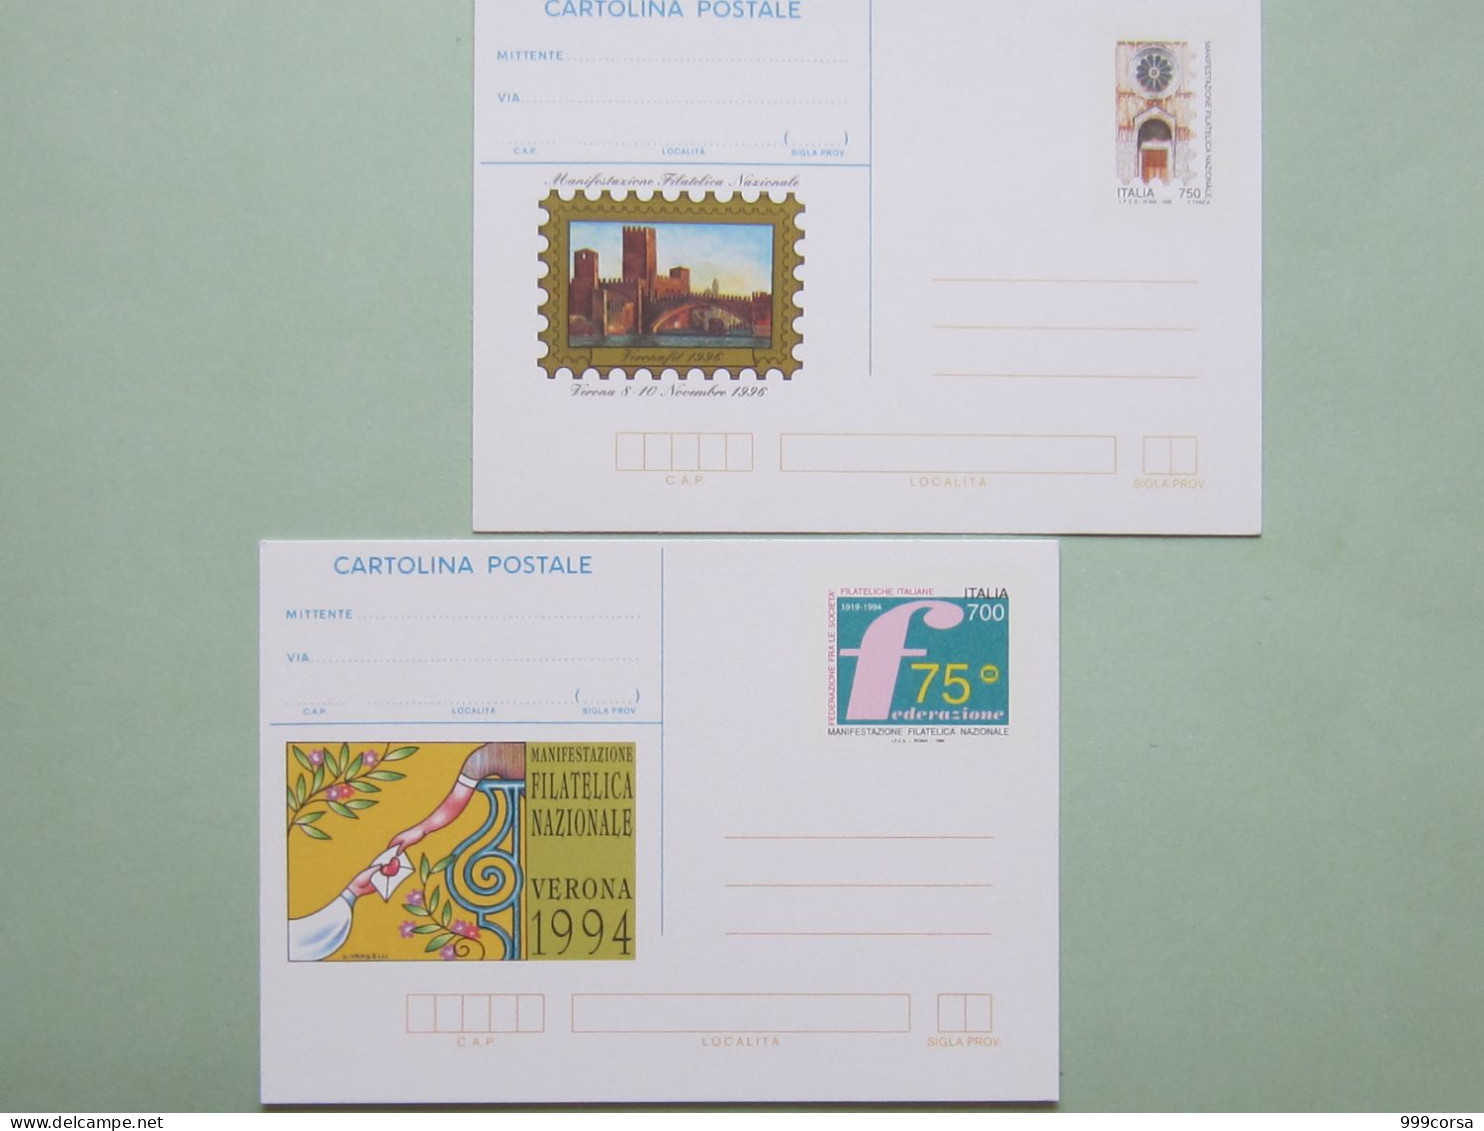 ITALIA 1994-1996-1997, Manifestaz.Filatelica Naz.Verona 94-96, Merano E Palermo 97, 4 Cart. Postali - Interi Postali